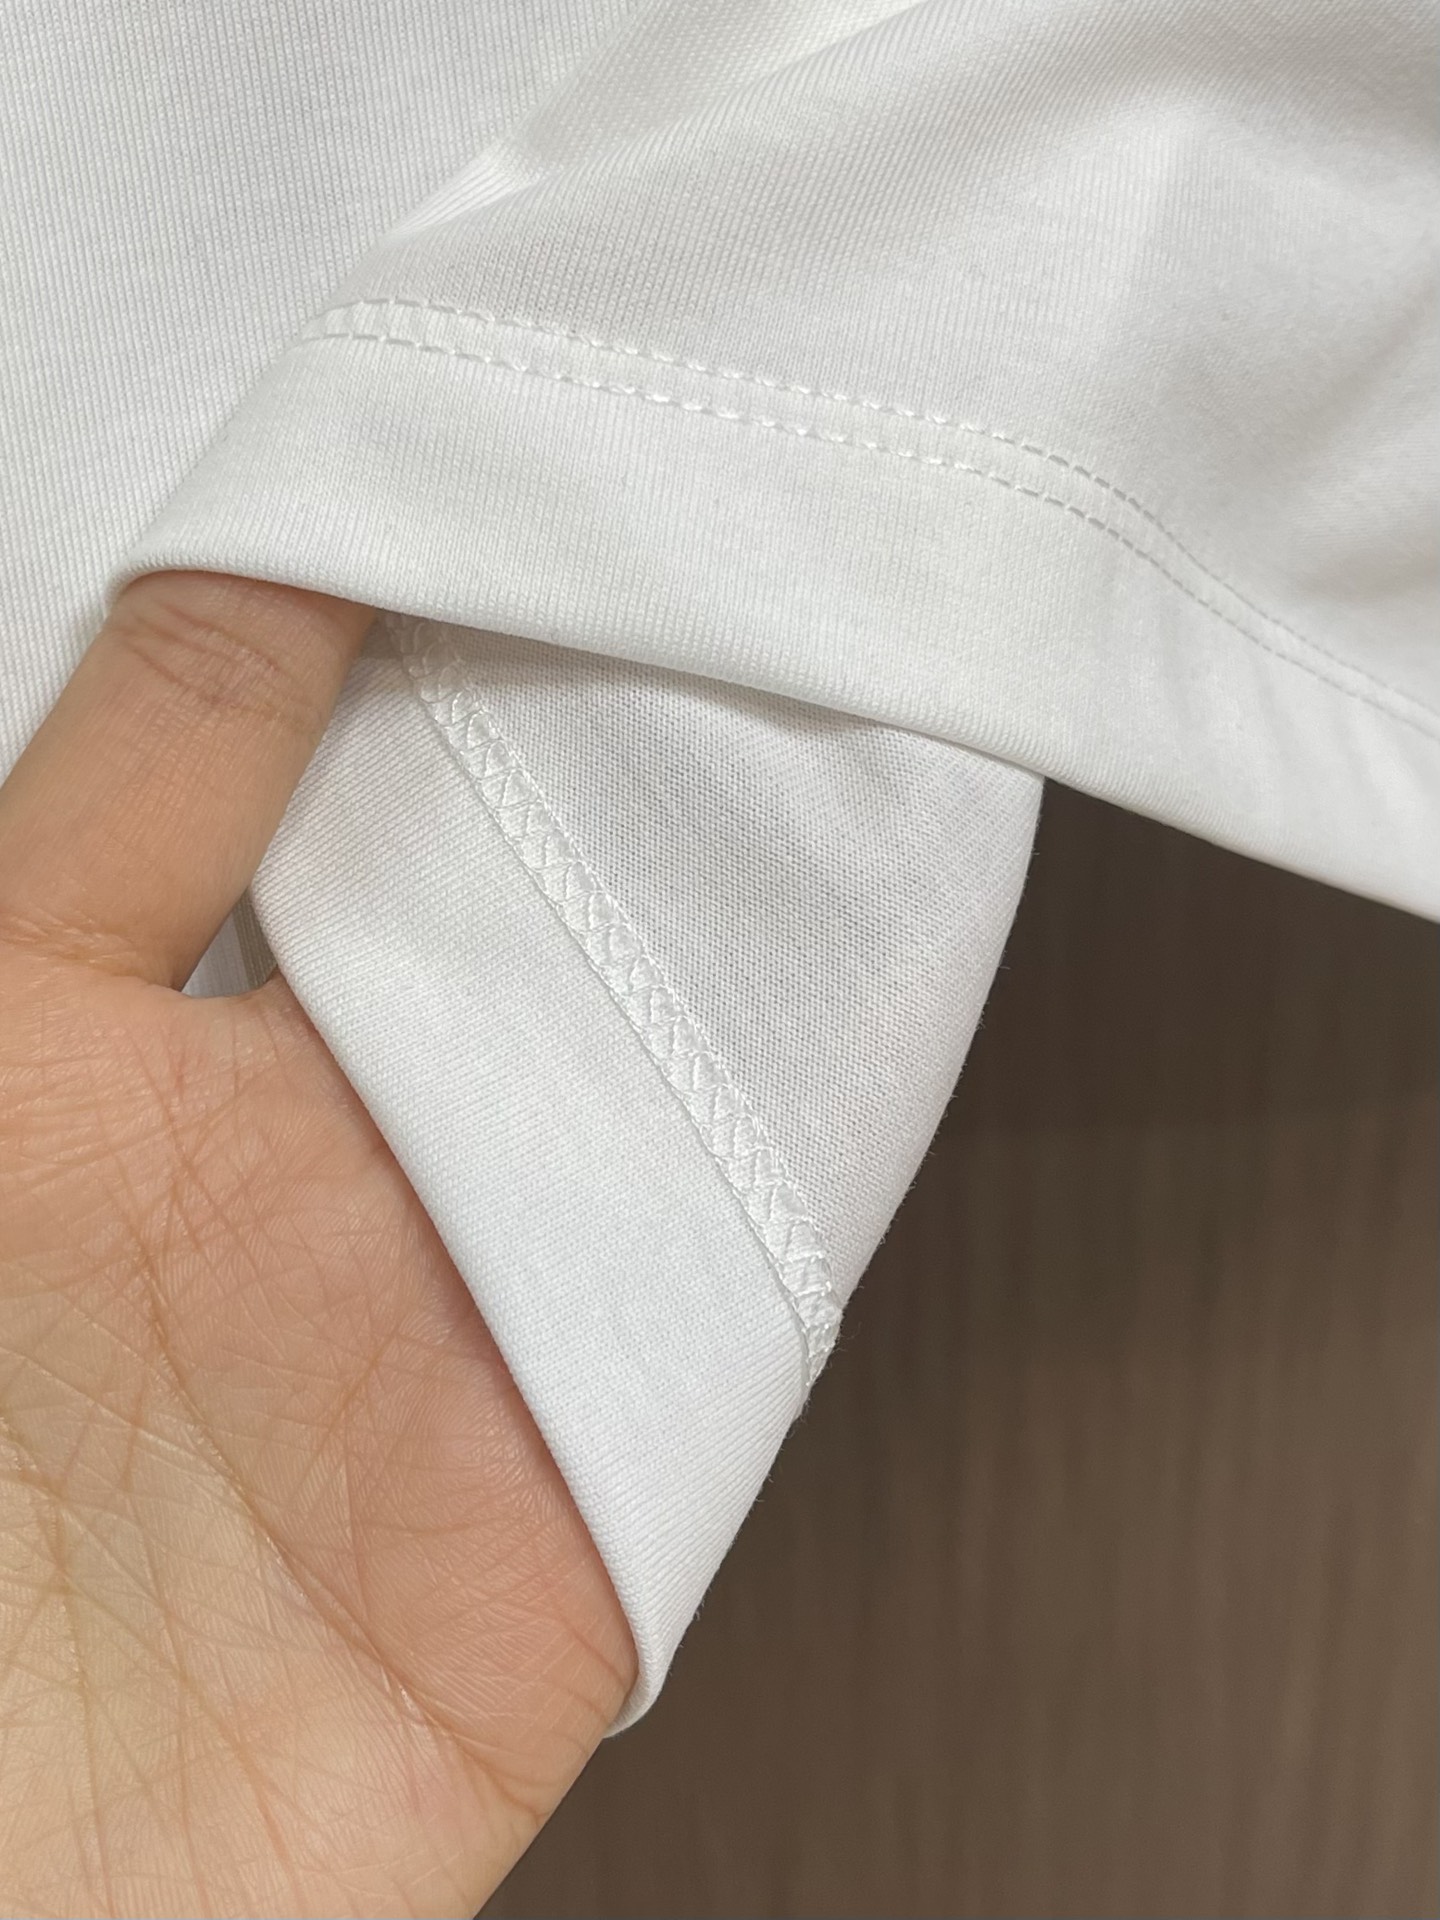 Moncler春夏新款短袖圆领T恤定制纯棉面料极为亲肤舒适摸上去手感非常的柔软质感很好做工细致完美体现立